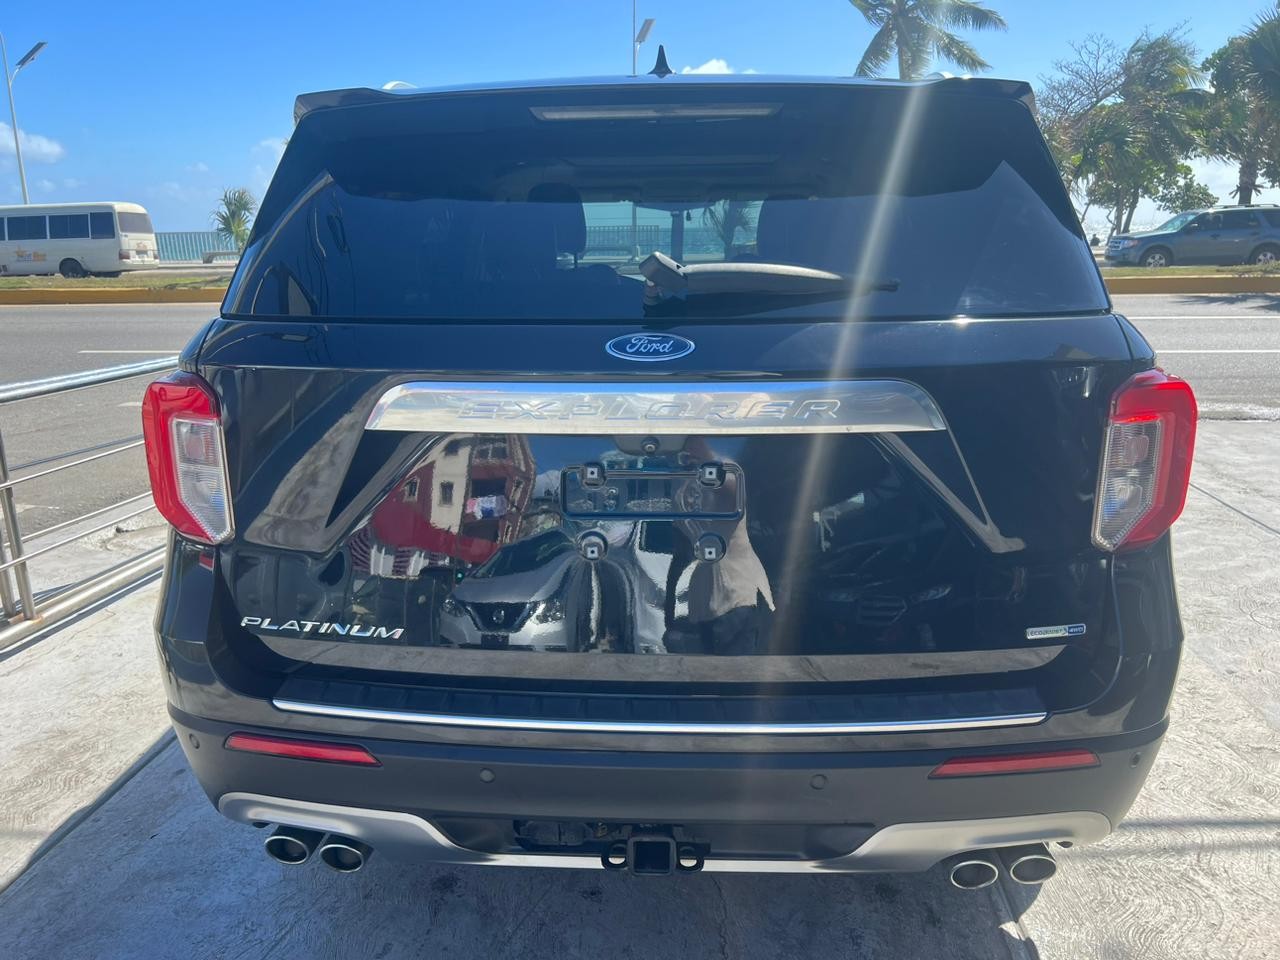 jeepetas y camionetas - Ford Explorer Platinum 2020 6